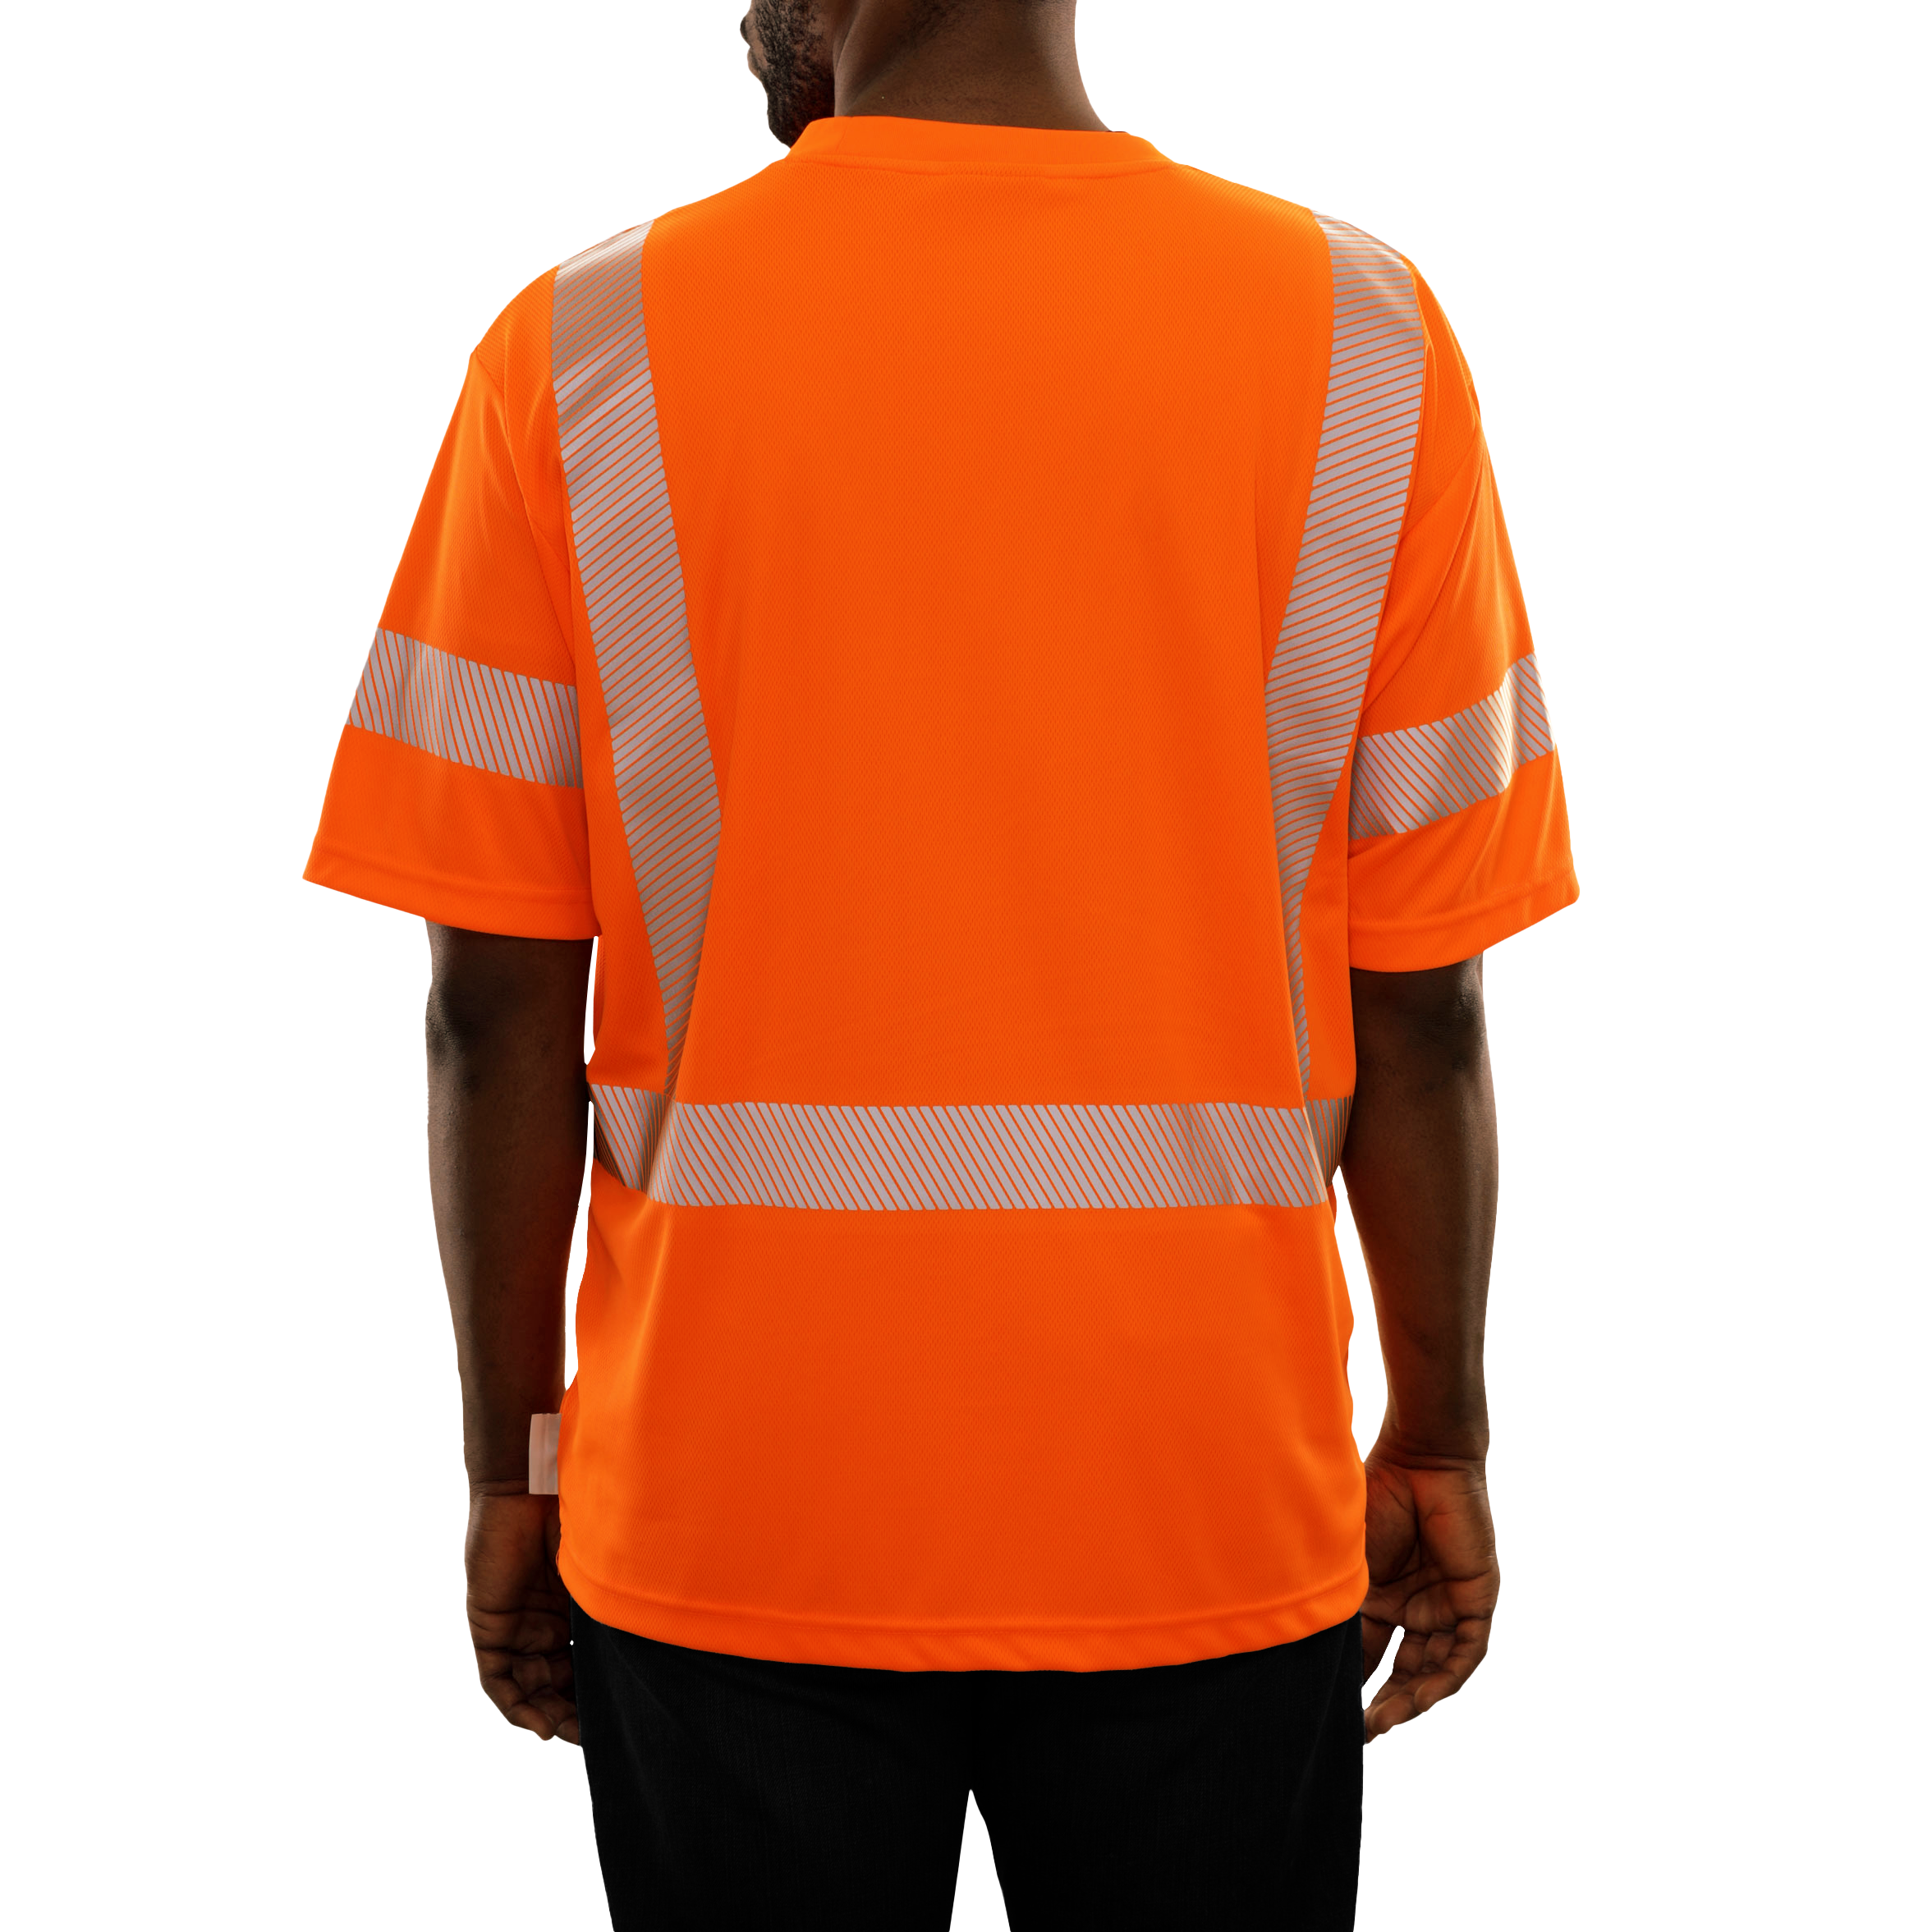 Reflective Apparel High Visibility Shirt Orange Birdseye Comfort Trim by 3M